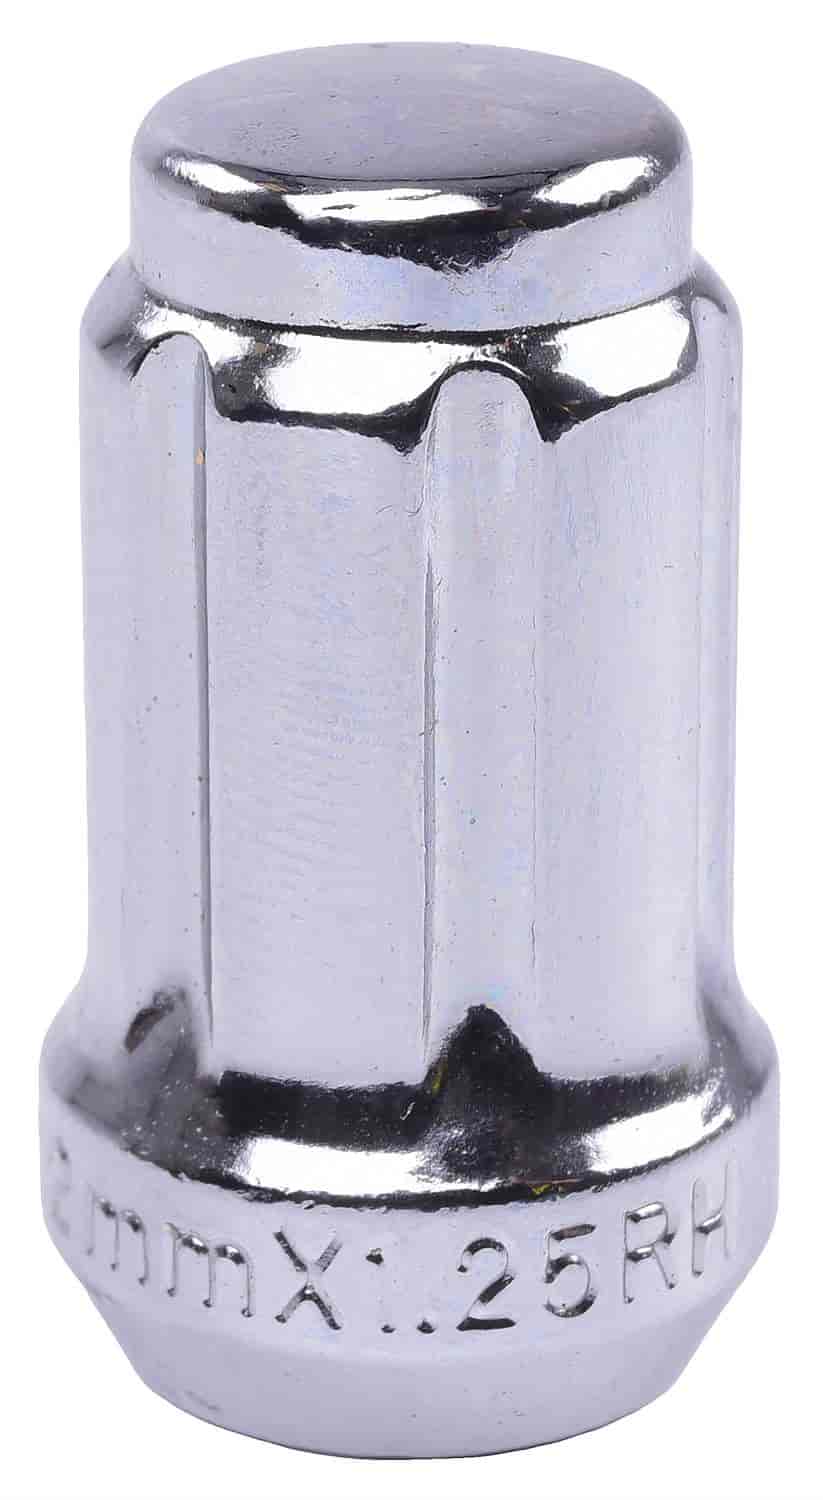 Spline Drive Lug Nuts, Short Closed-End [12mm x